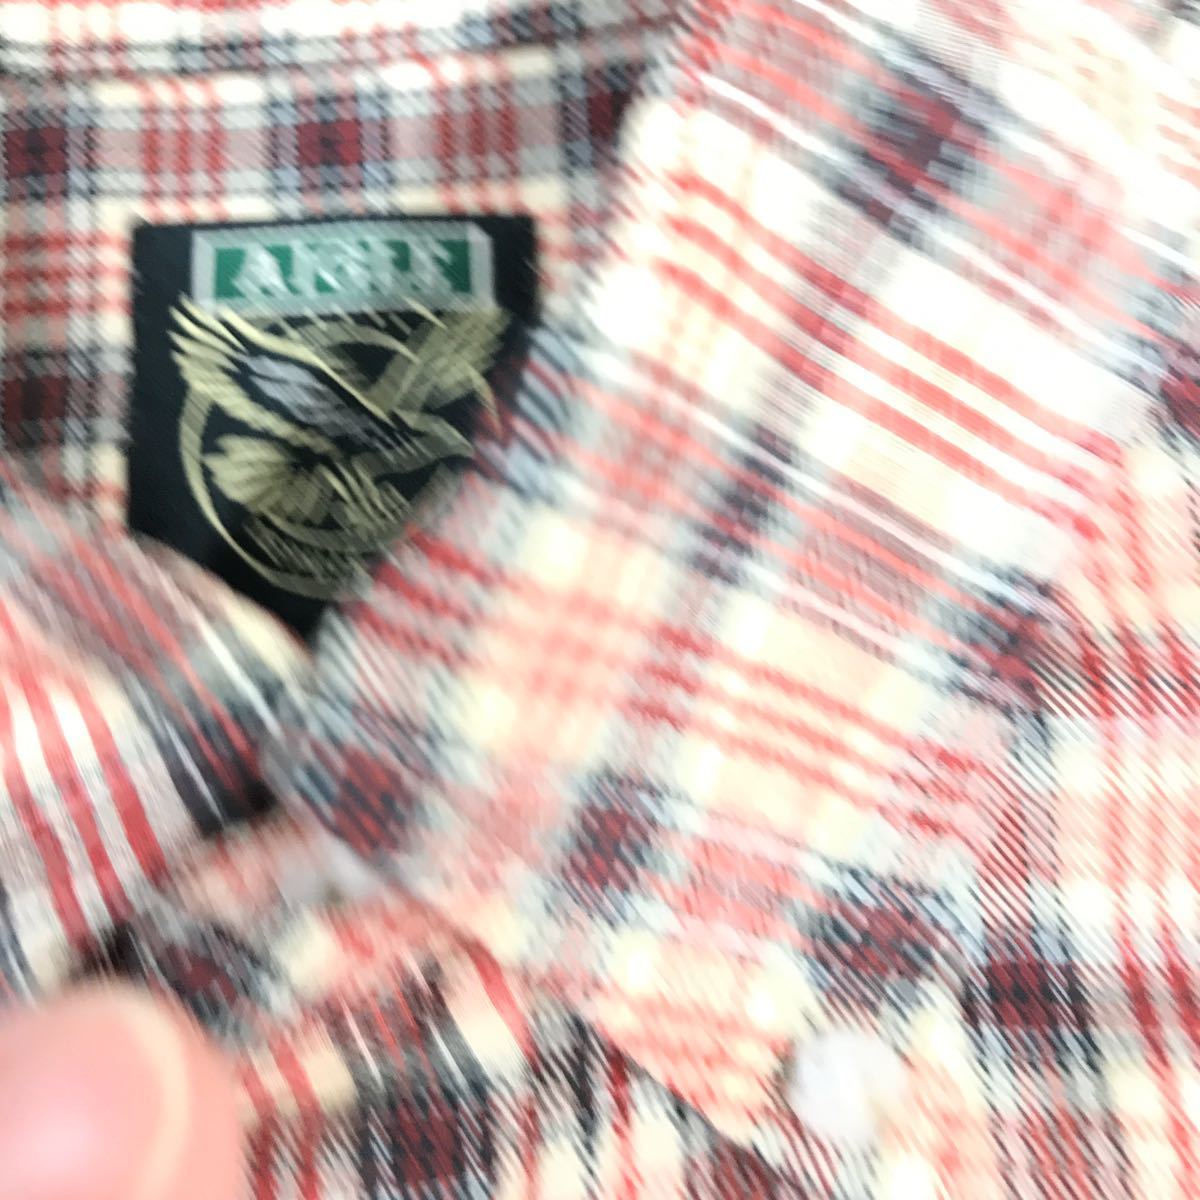 AIGLE Aigle long sleeve shirt button down shirt check pattern outdoor men's M size 32-58a